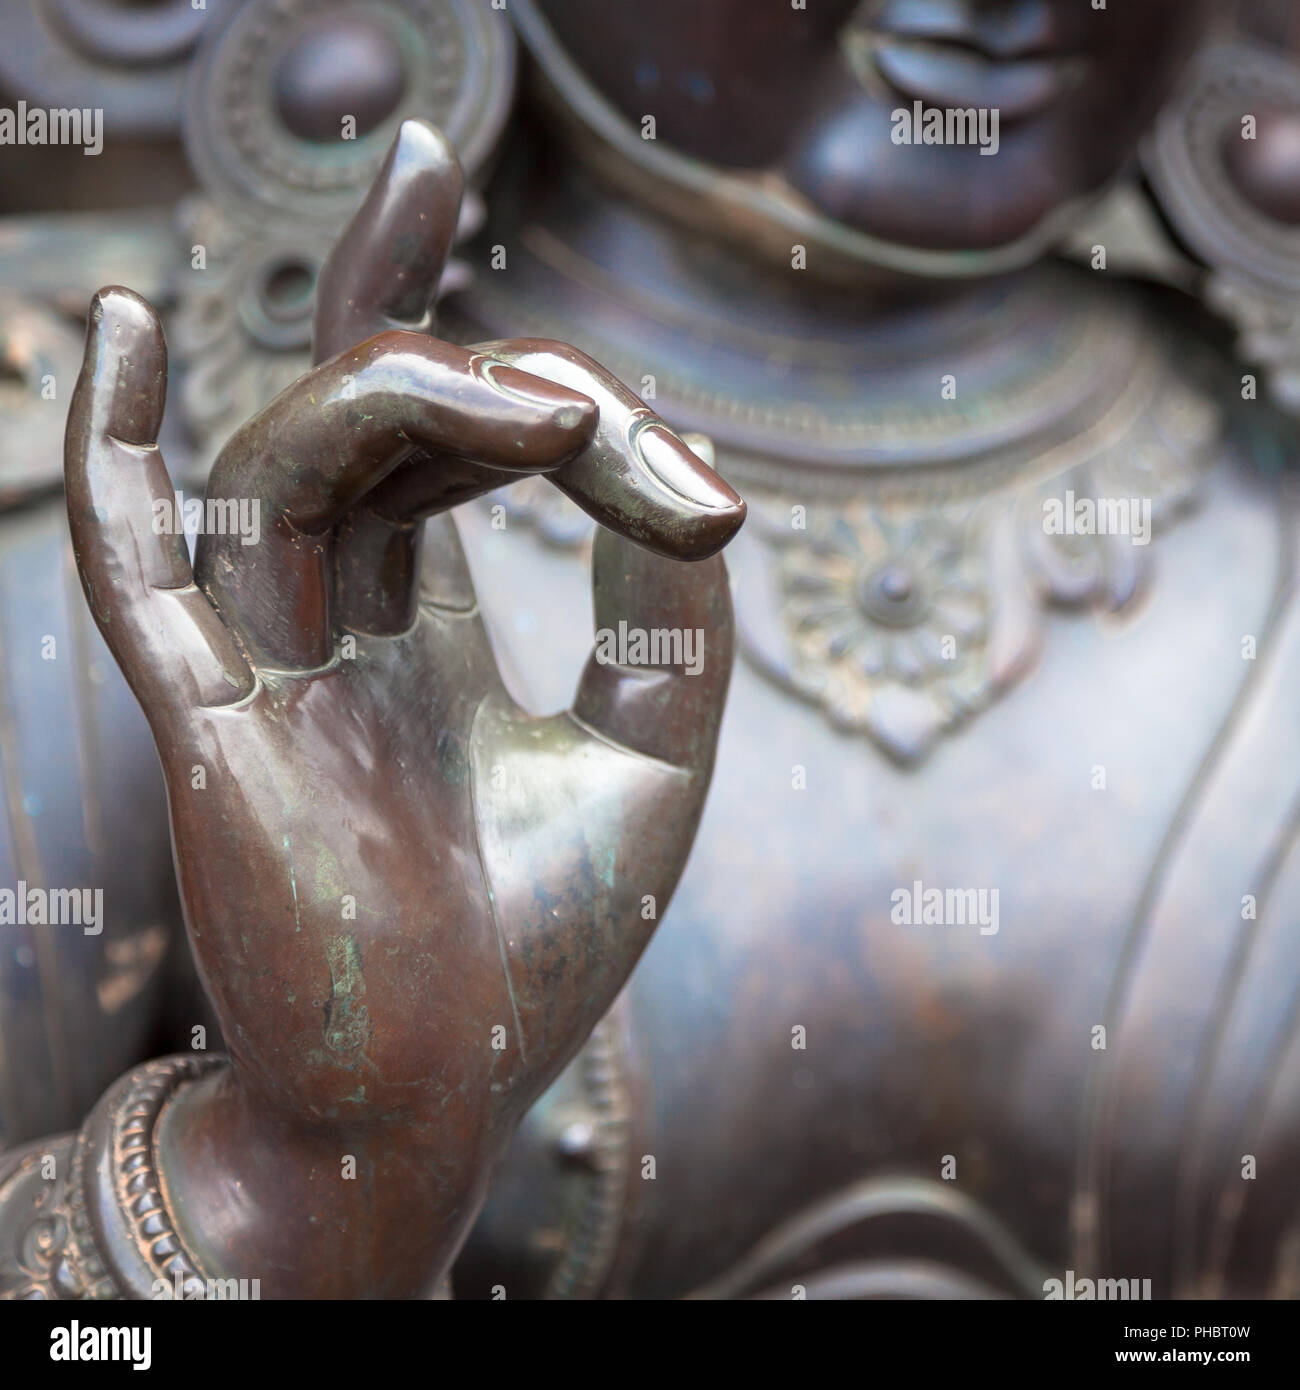 Detail of Buddha statue with Karana mudra hand position Stock Photo